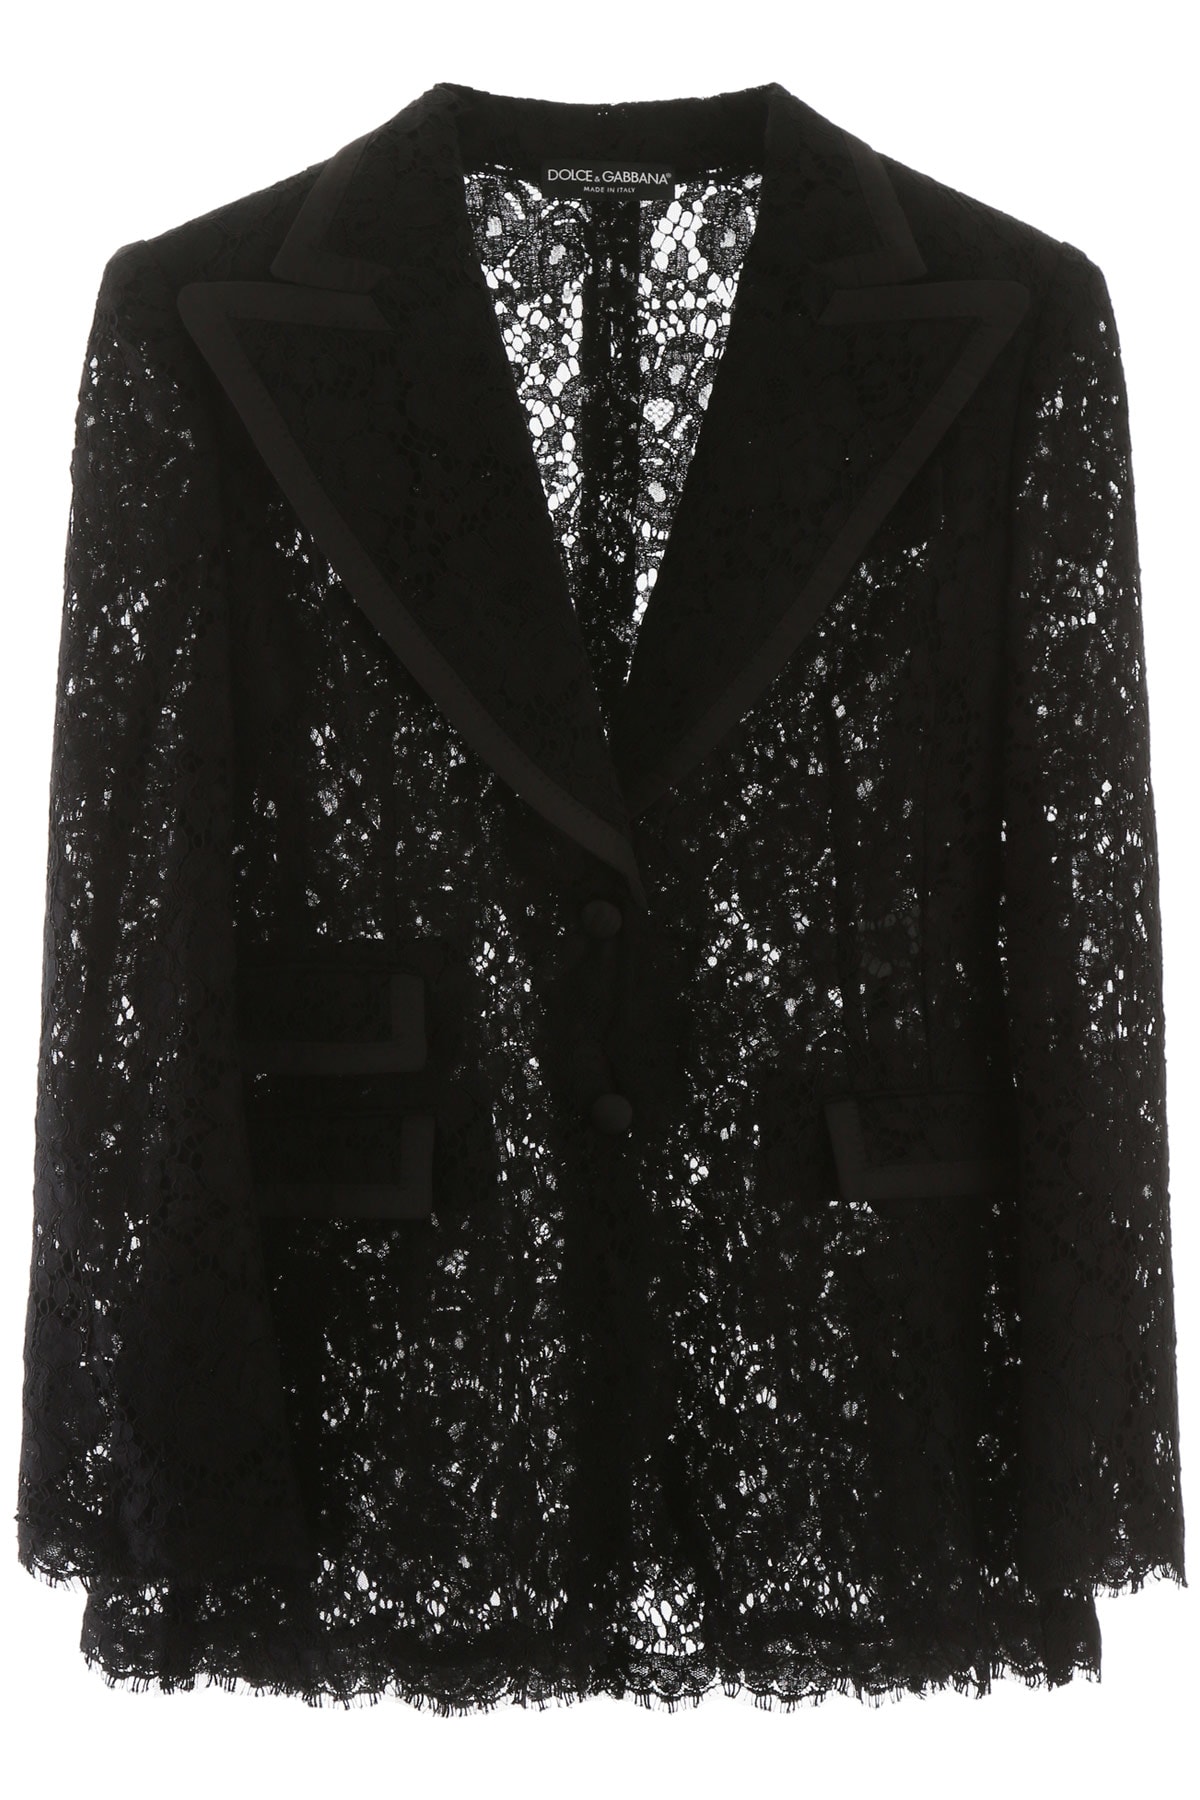 Dolce & Gabbana Lace Jacket Black | Coshio Online Shop